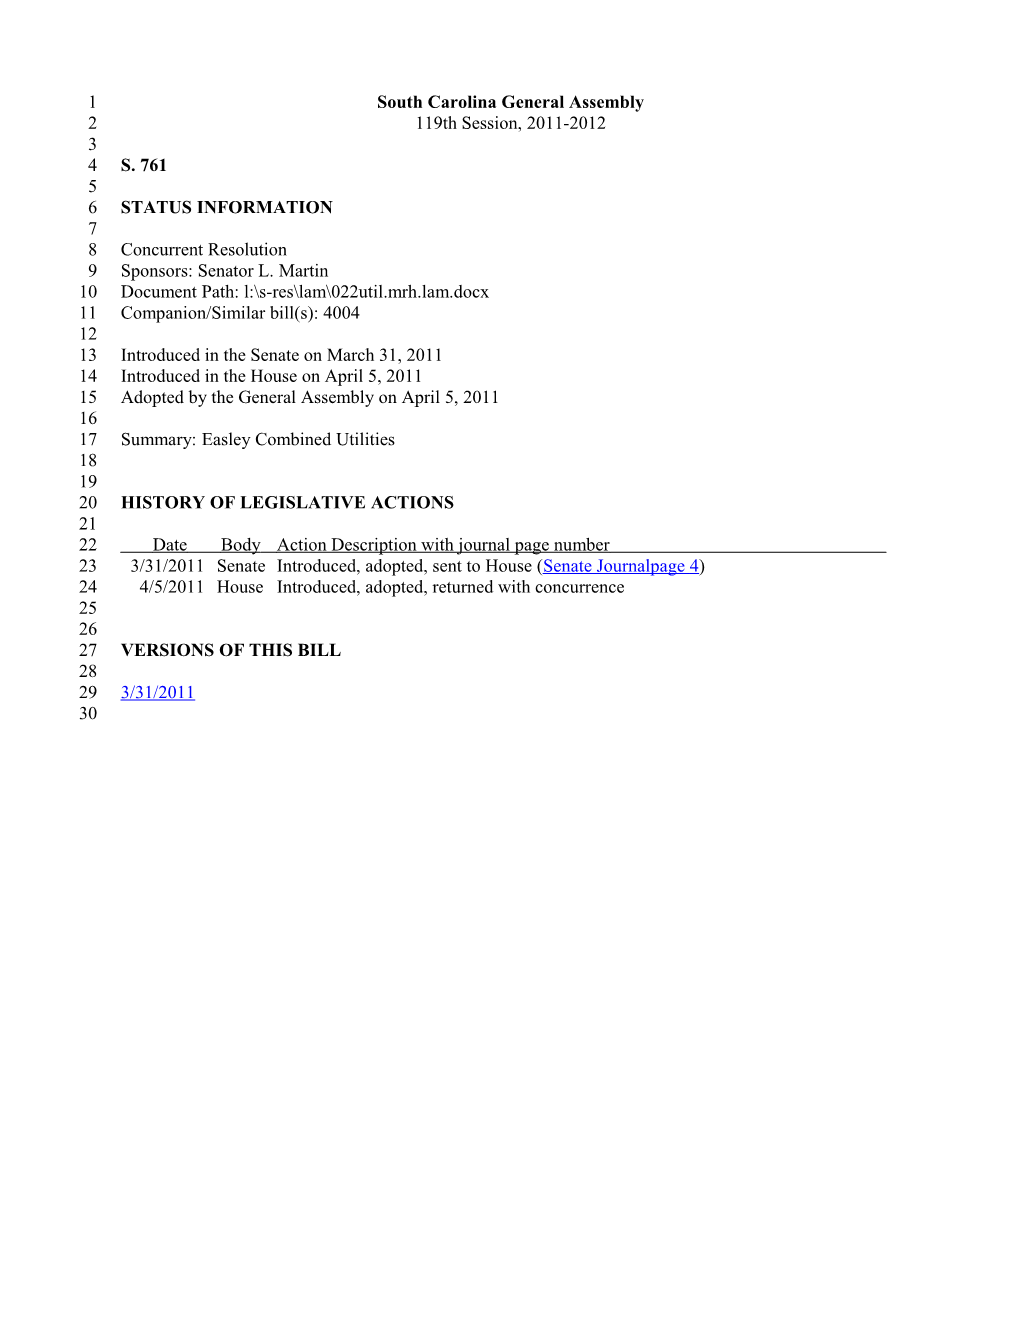 2011-2012 Bill 761: Easley Combined Utilities - South Carolina Legislature Online